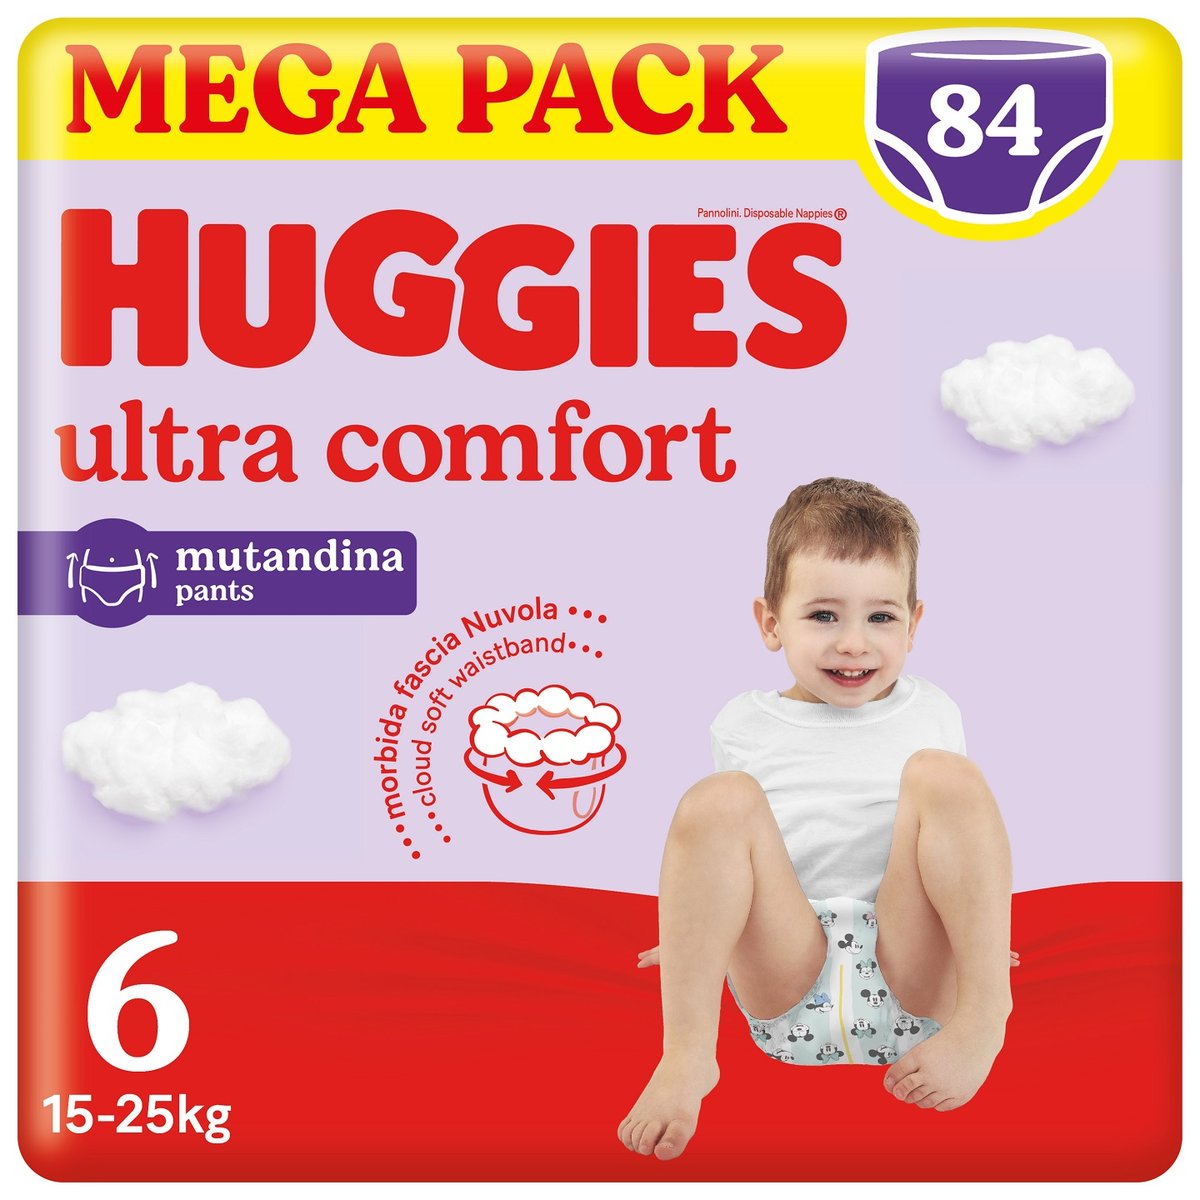 HUGGIES Elite Soft Pants Mega Pieluchomajtki rozmiar 3 (6 - 11 kg) 48szt